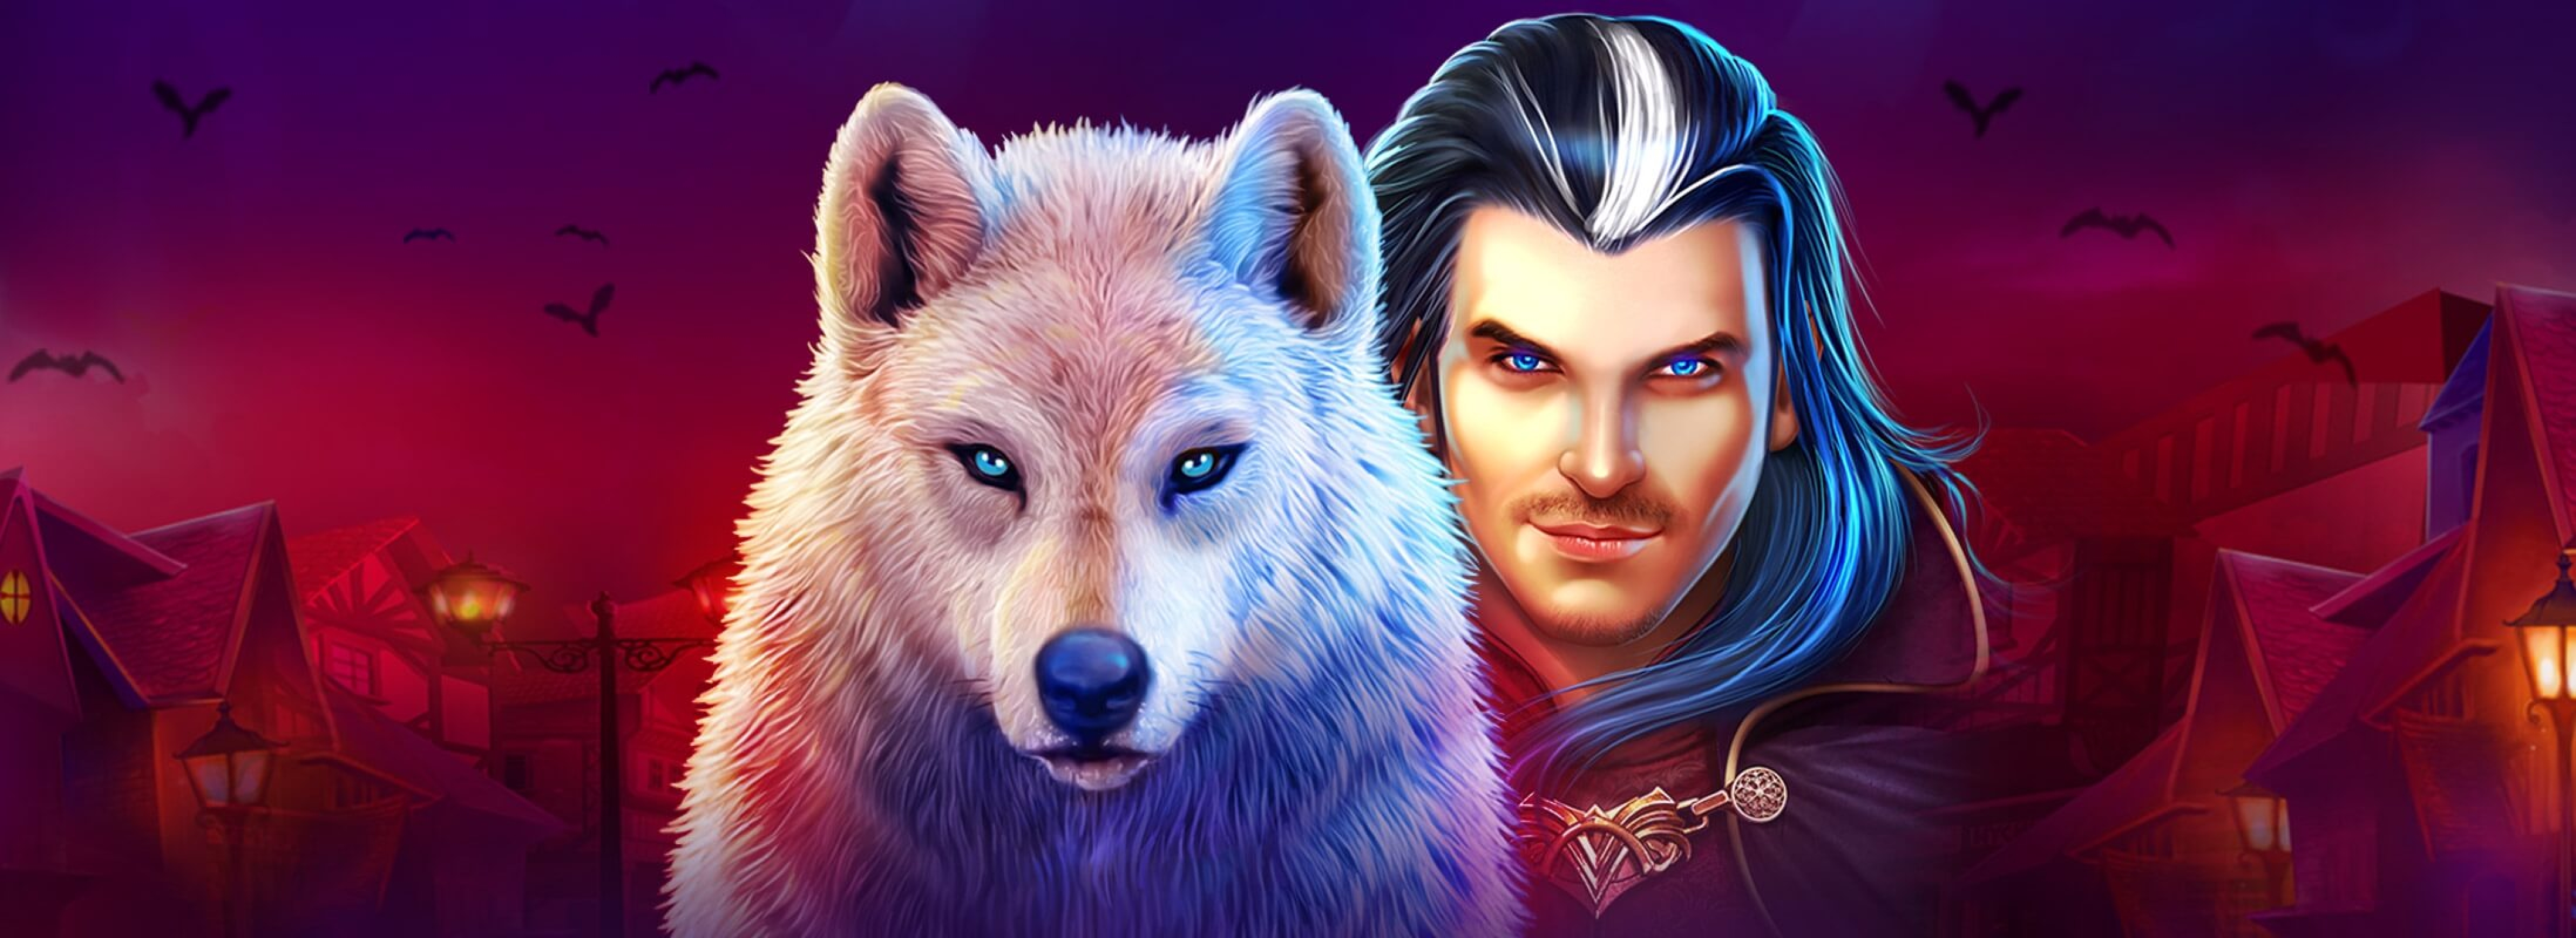 The Vampires vs Wolves Online Slot Demo Game by Pragmatic Play